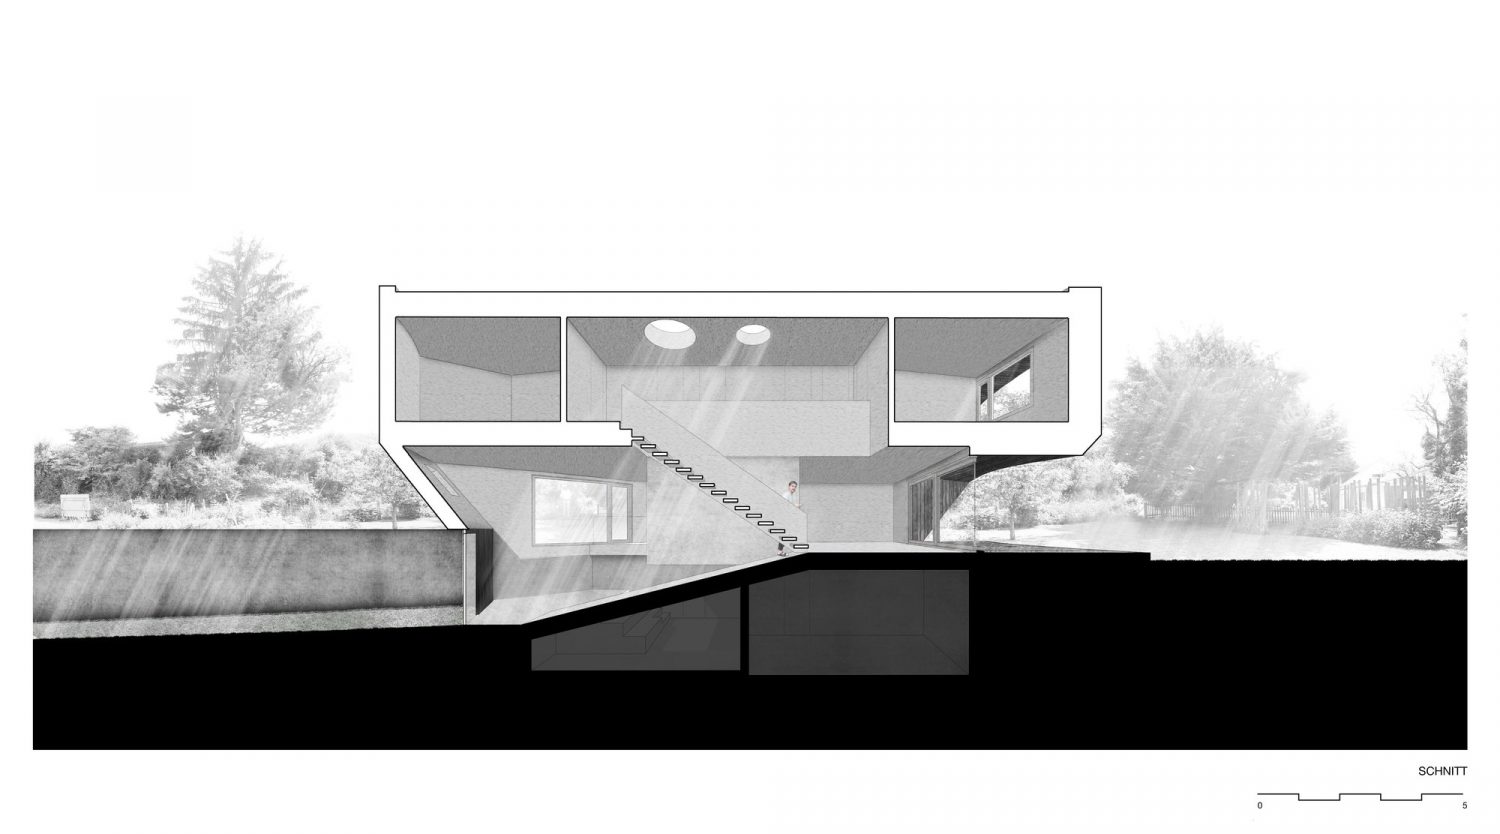 Casa Curved by Daluz Gonzalez Architekten